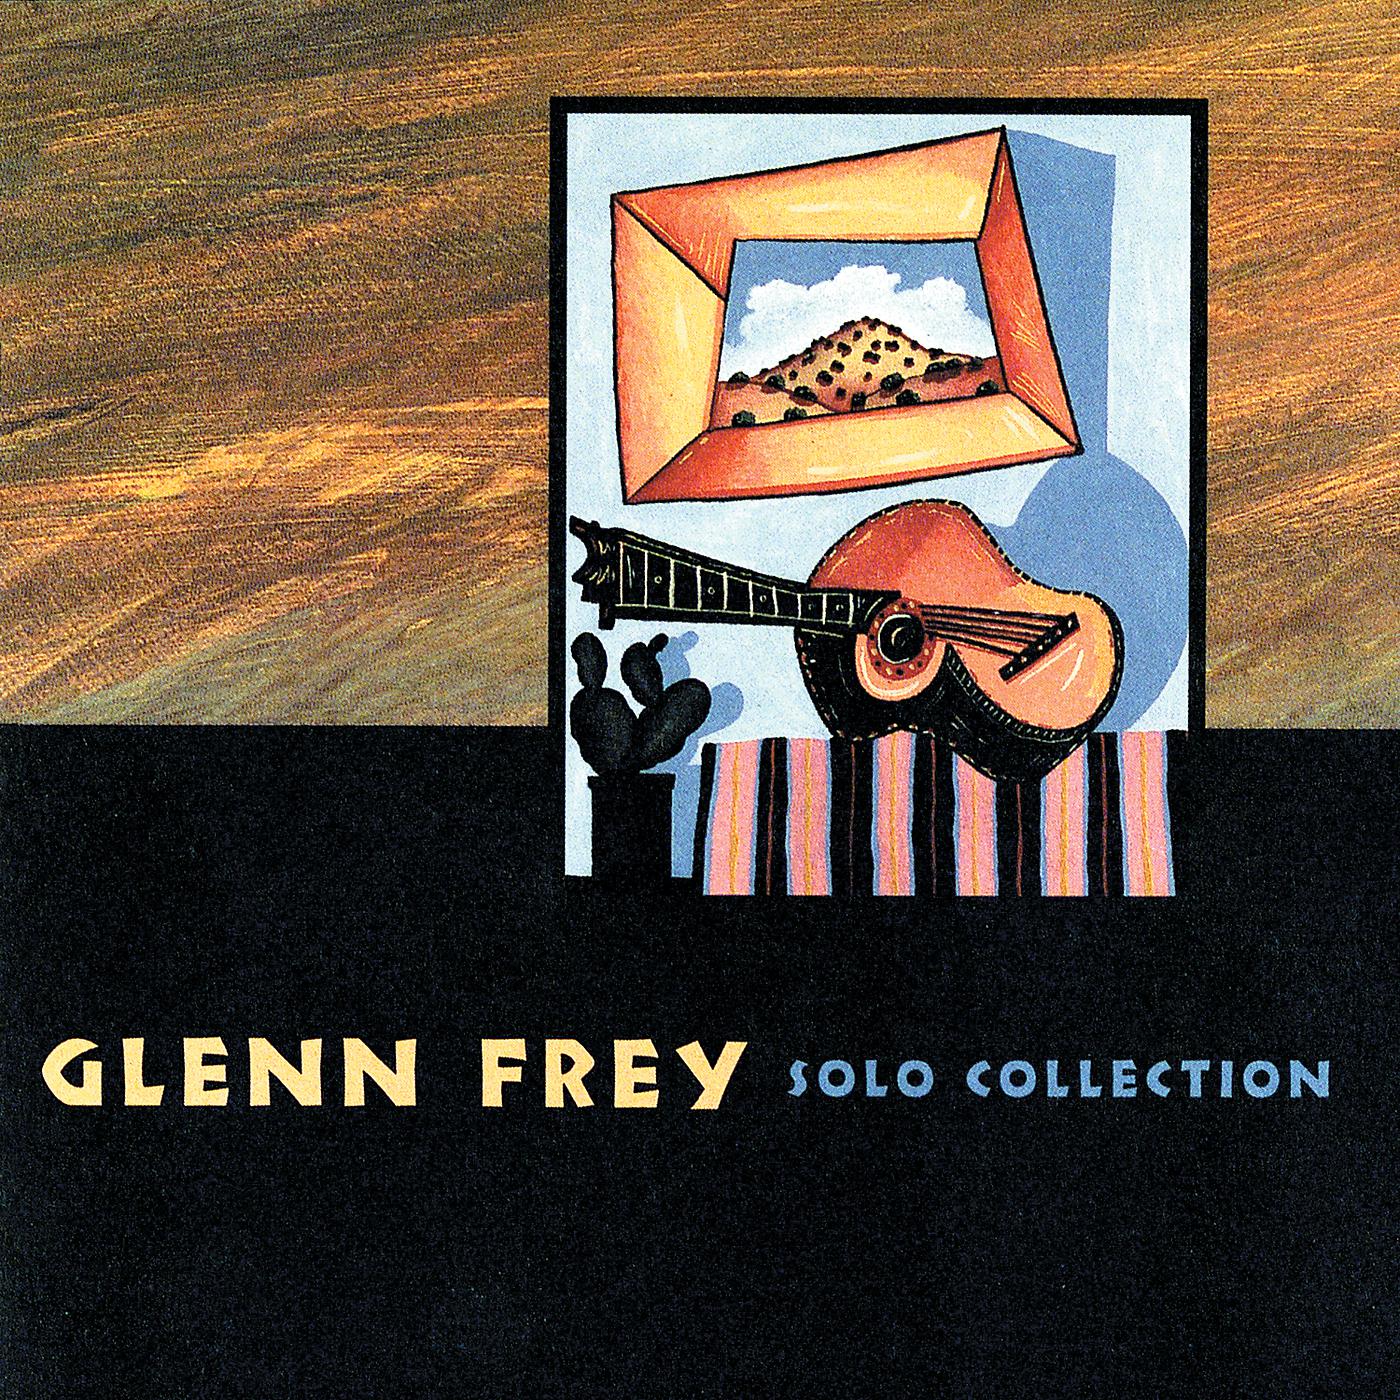 Solo collection. Glenn Frey solo collection 1995 CD. Glenn Frey 1985. Glenn Frey solo collection. Glenn Frey albums.